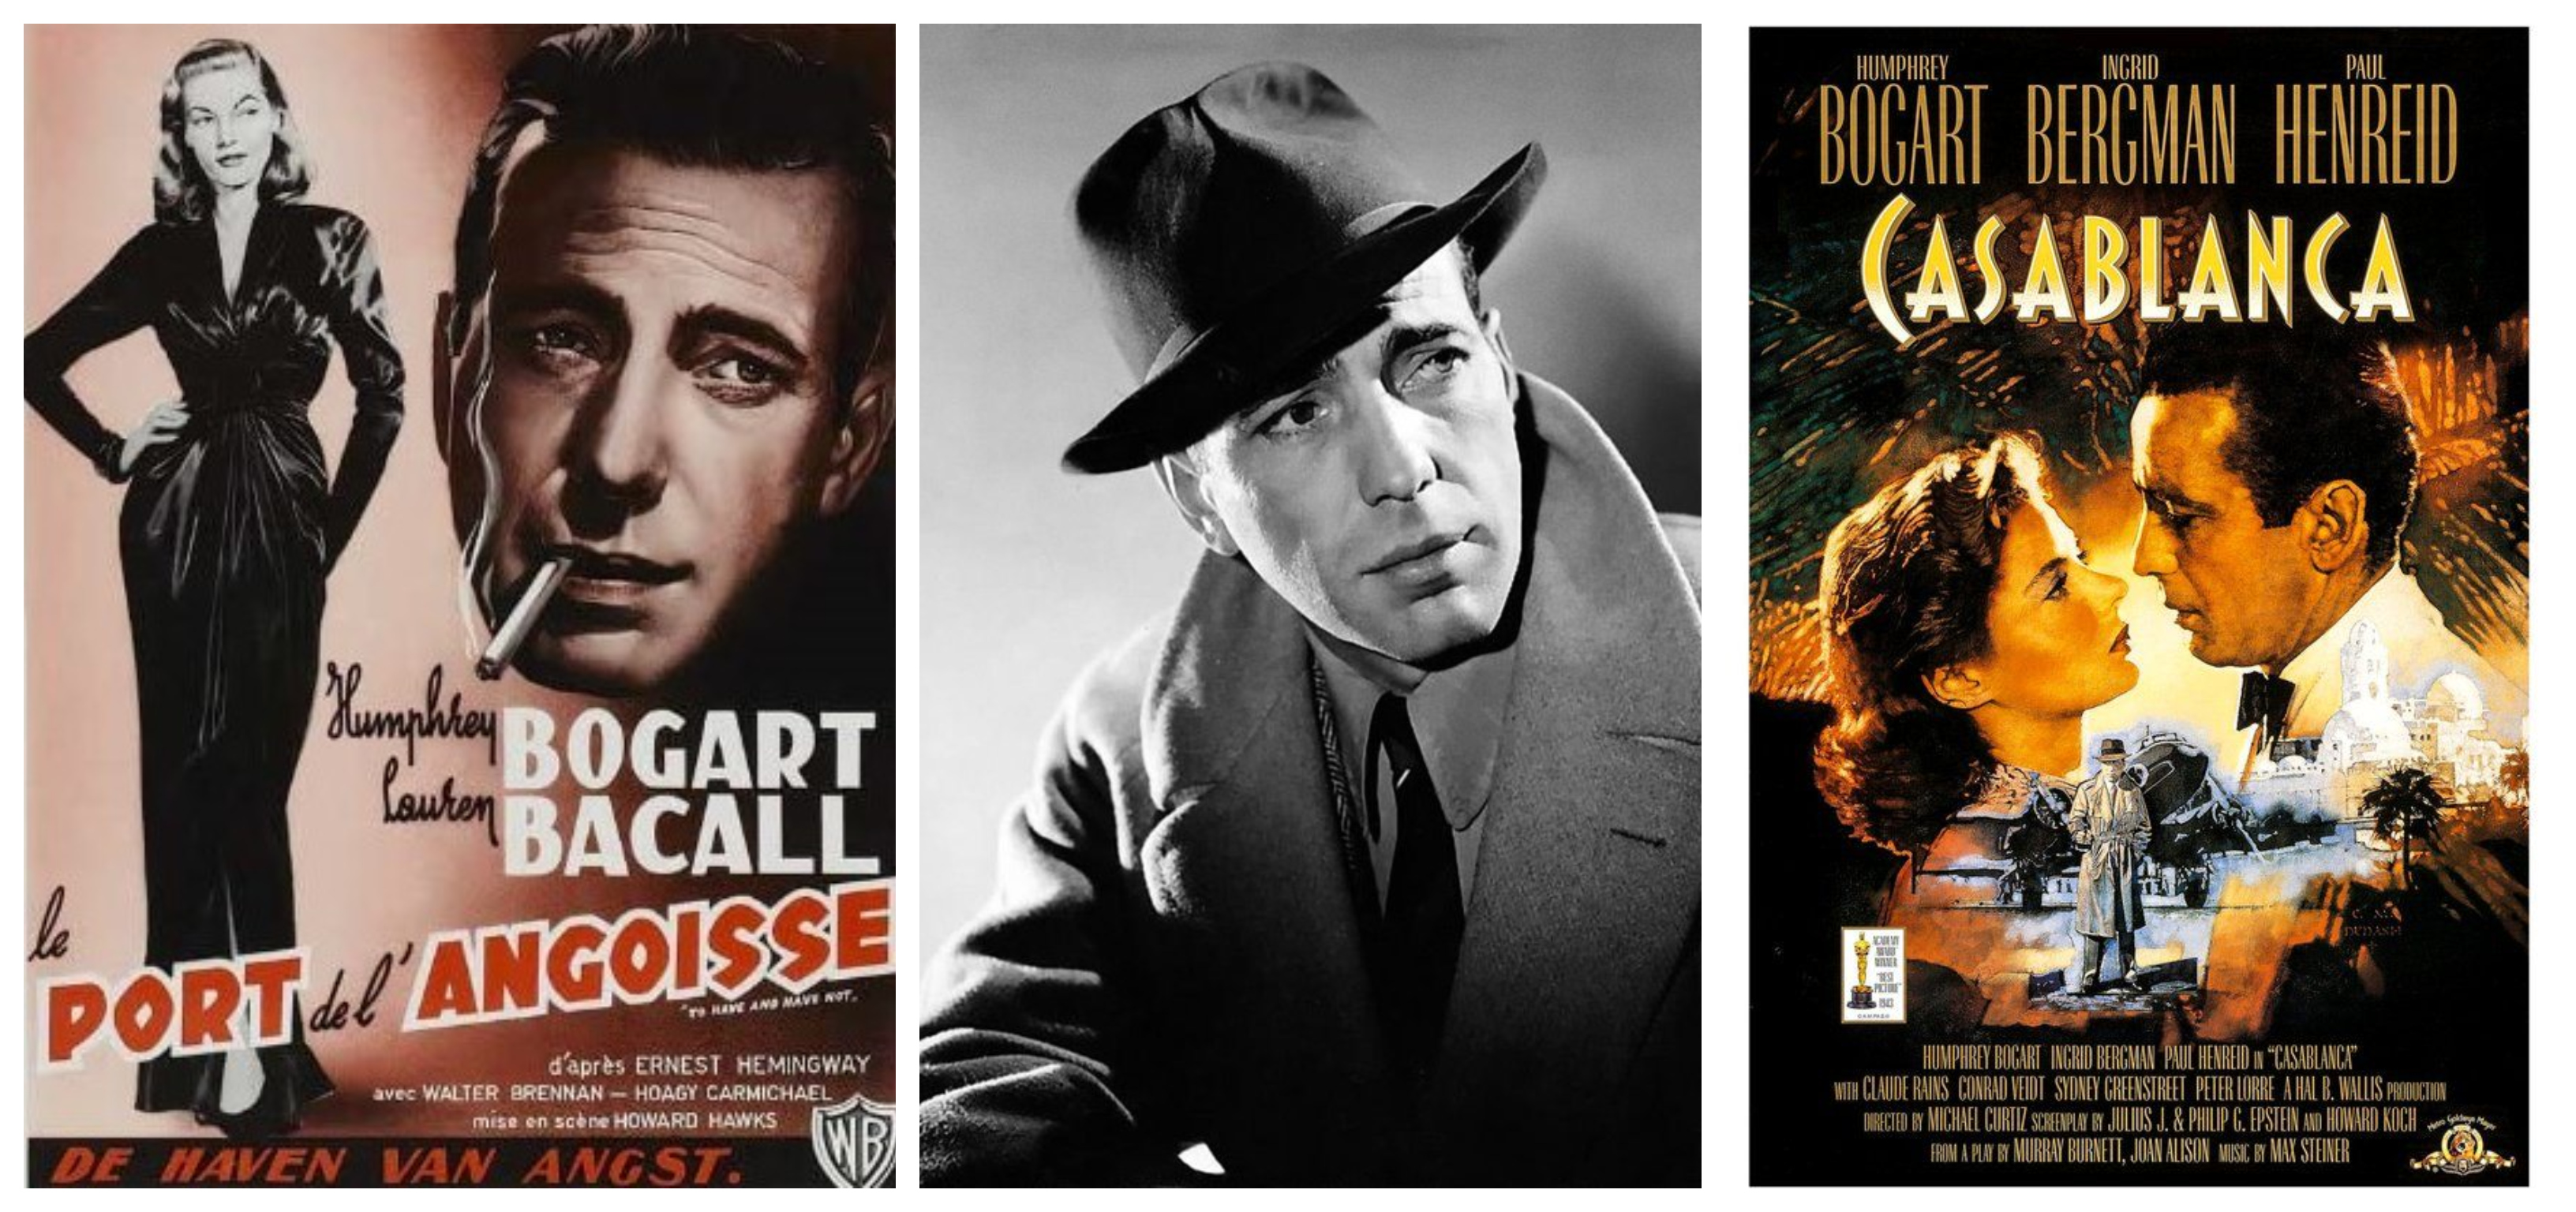 Bogart 1975. Жак Богарт фото. Хэмфри Богарт афиши. VIN Bogart певец.